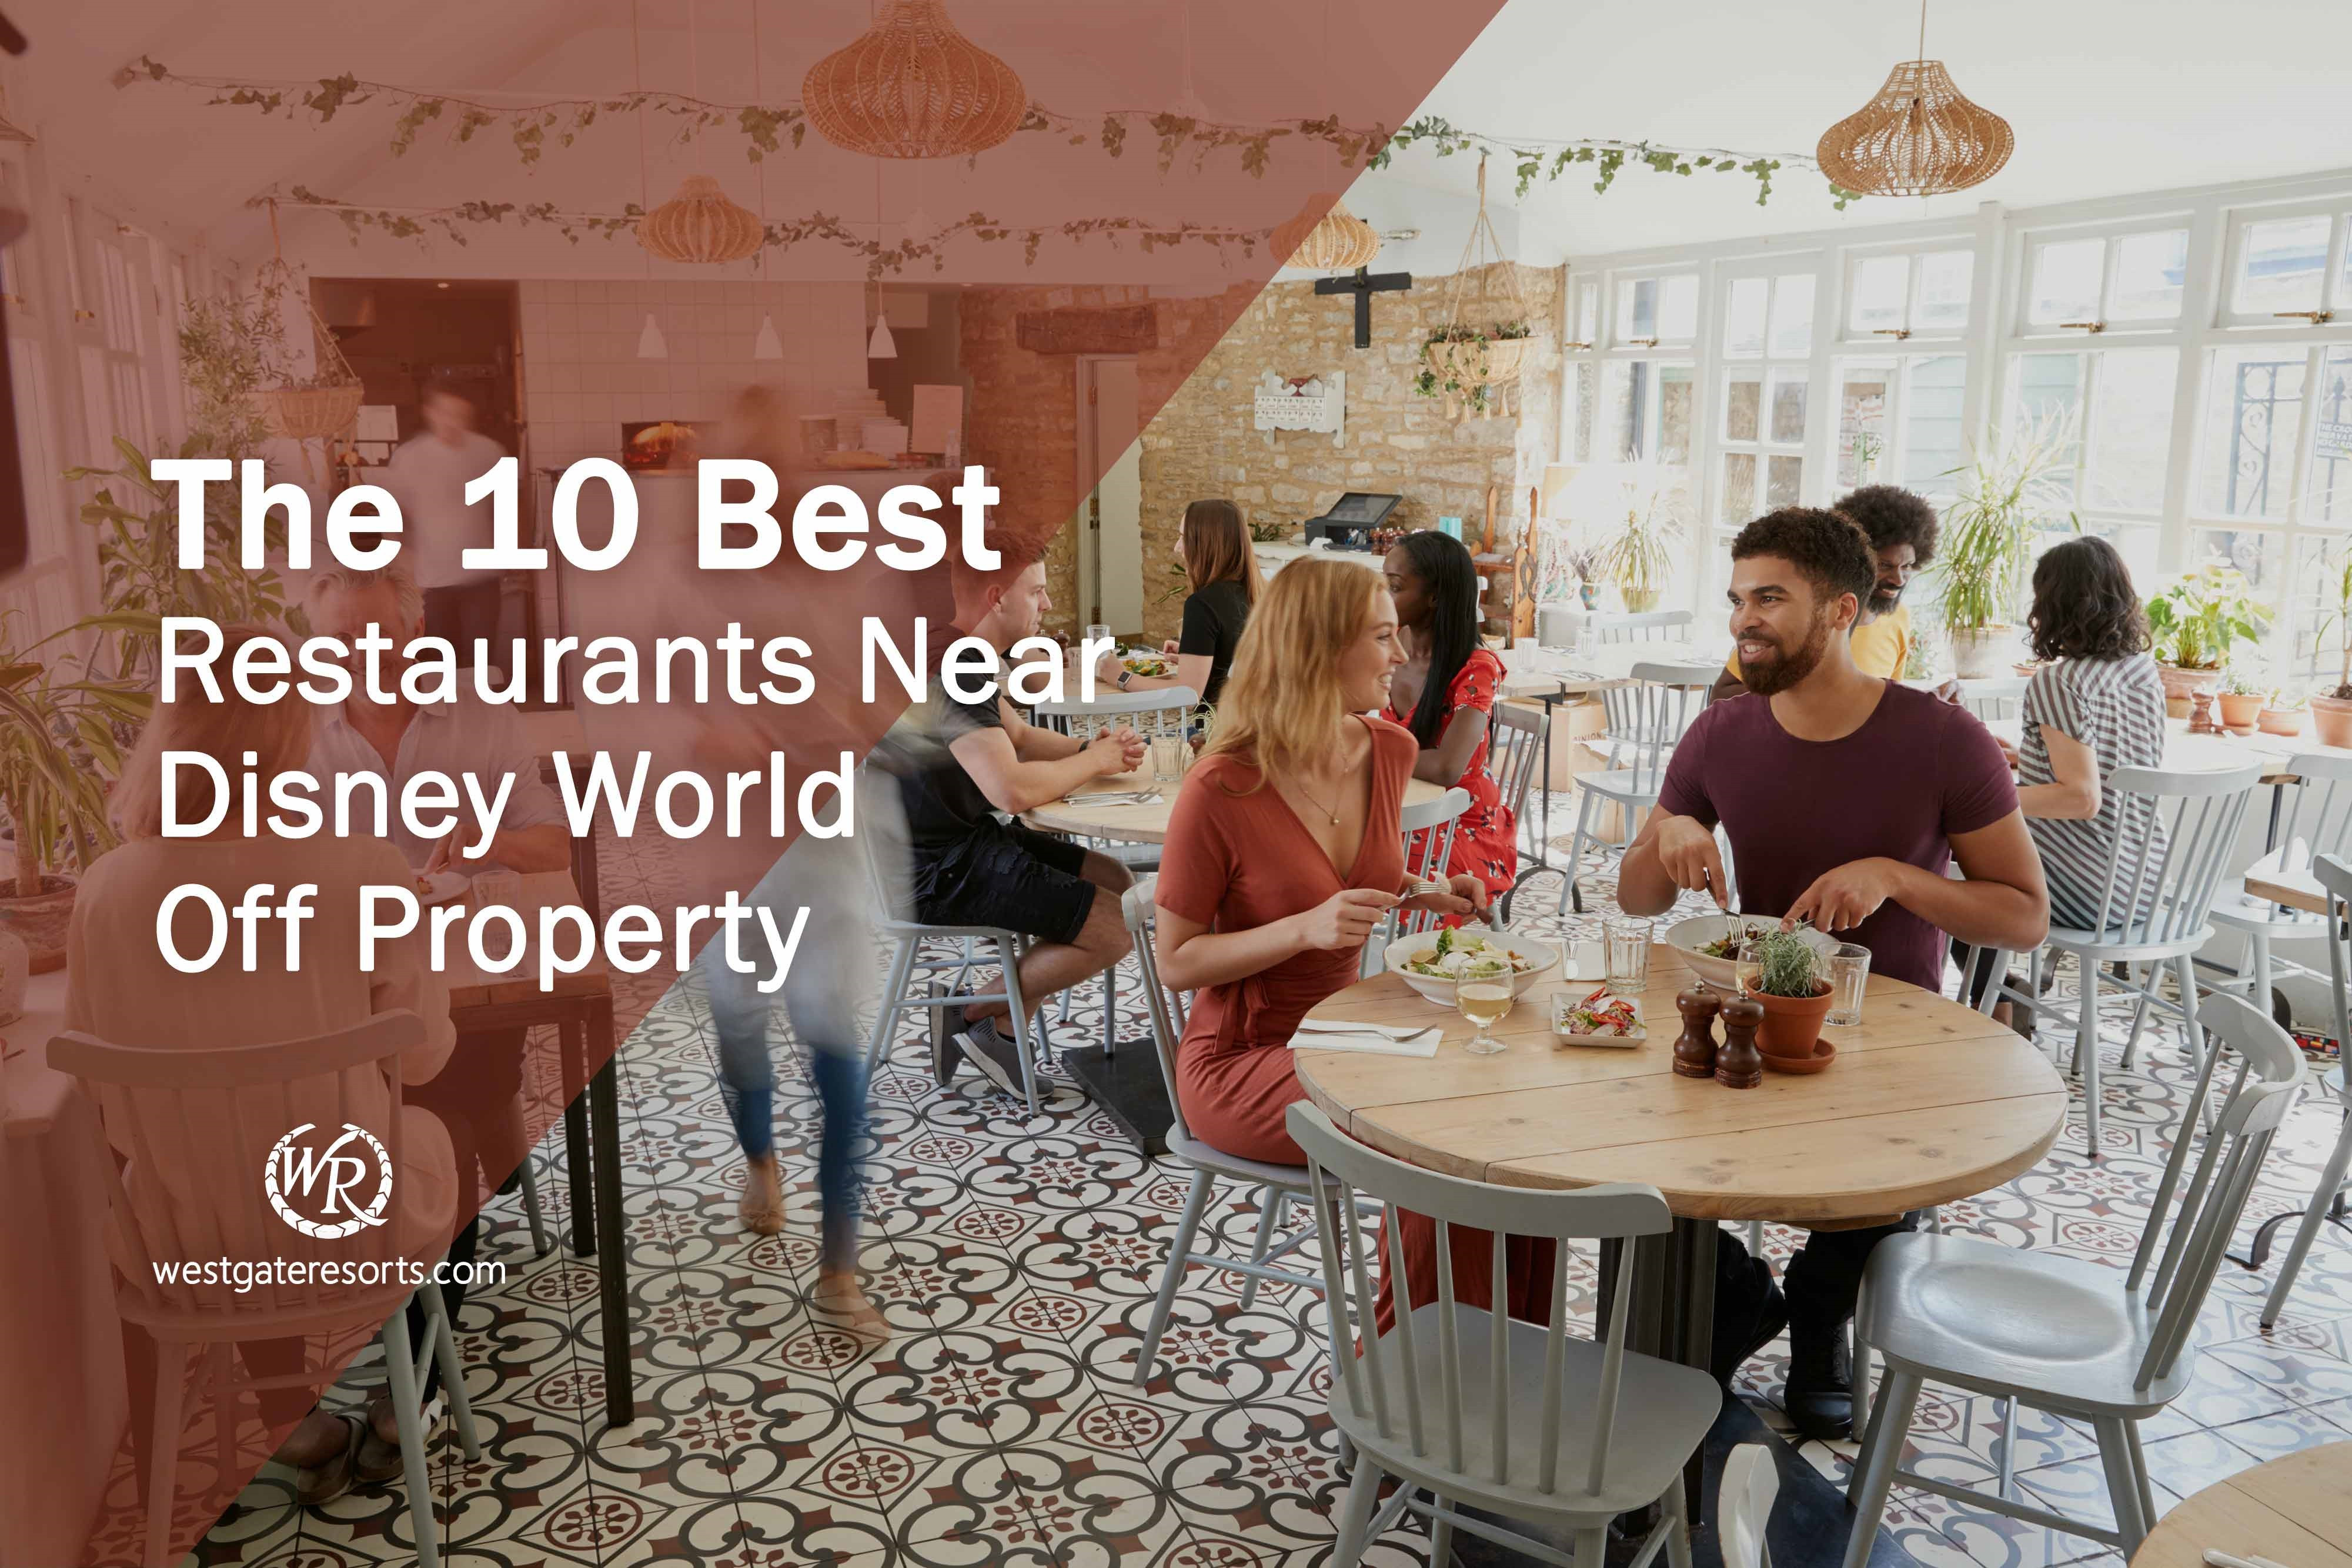 The 10 Best Restaurants Near Disney World Off Property